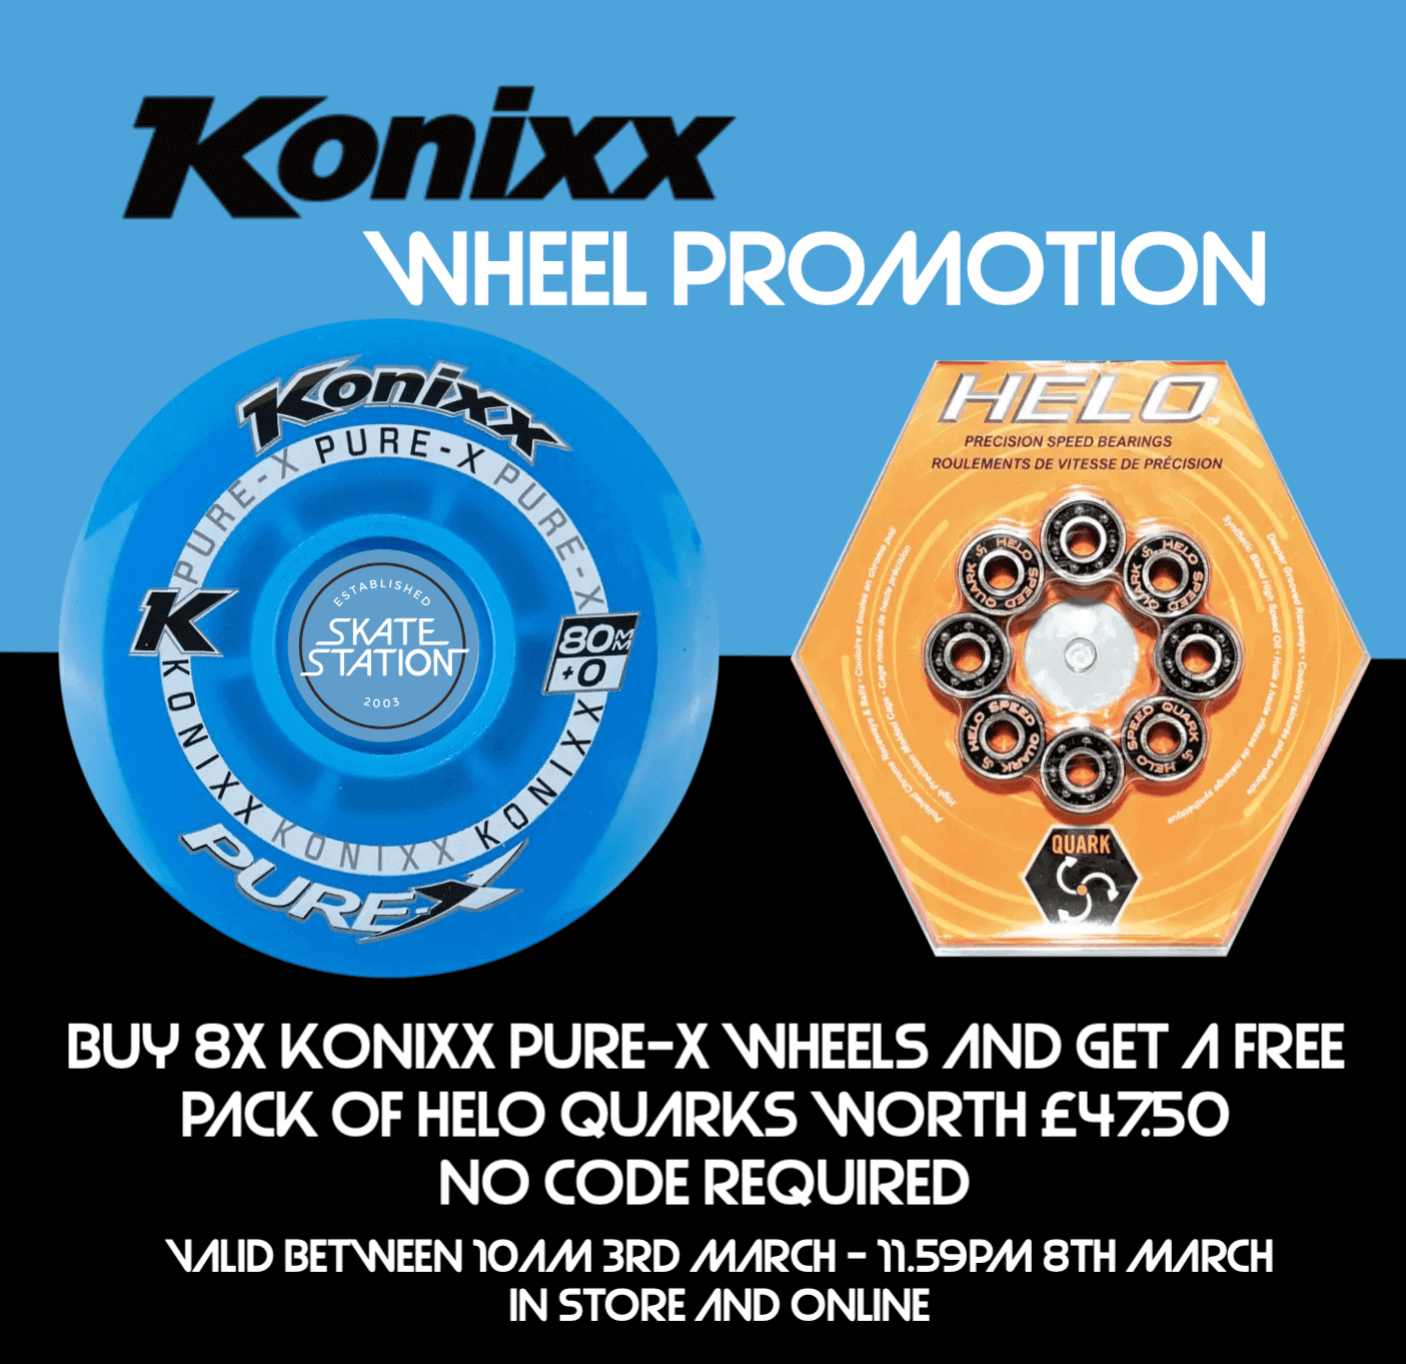 Buy 8 Konixx Pure-X Wheels and get a FREE set of Helo Quark Bearings